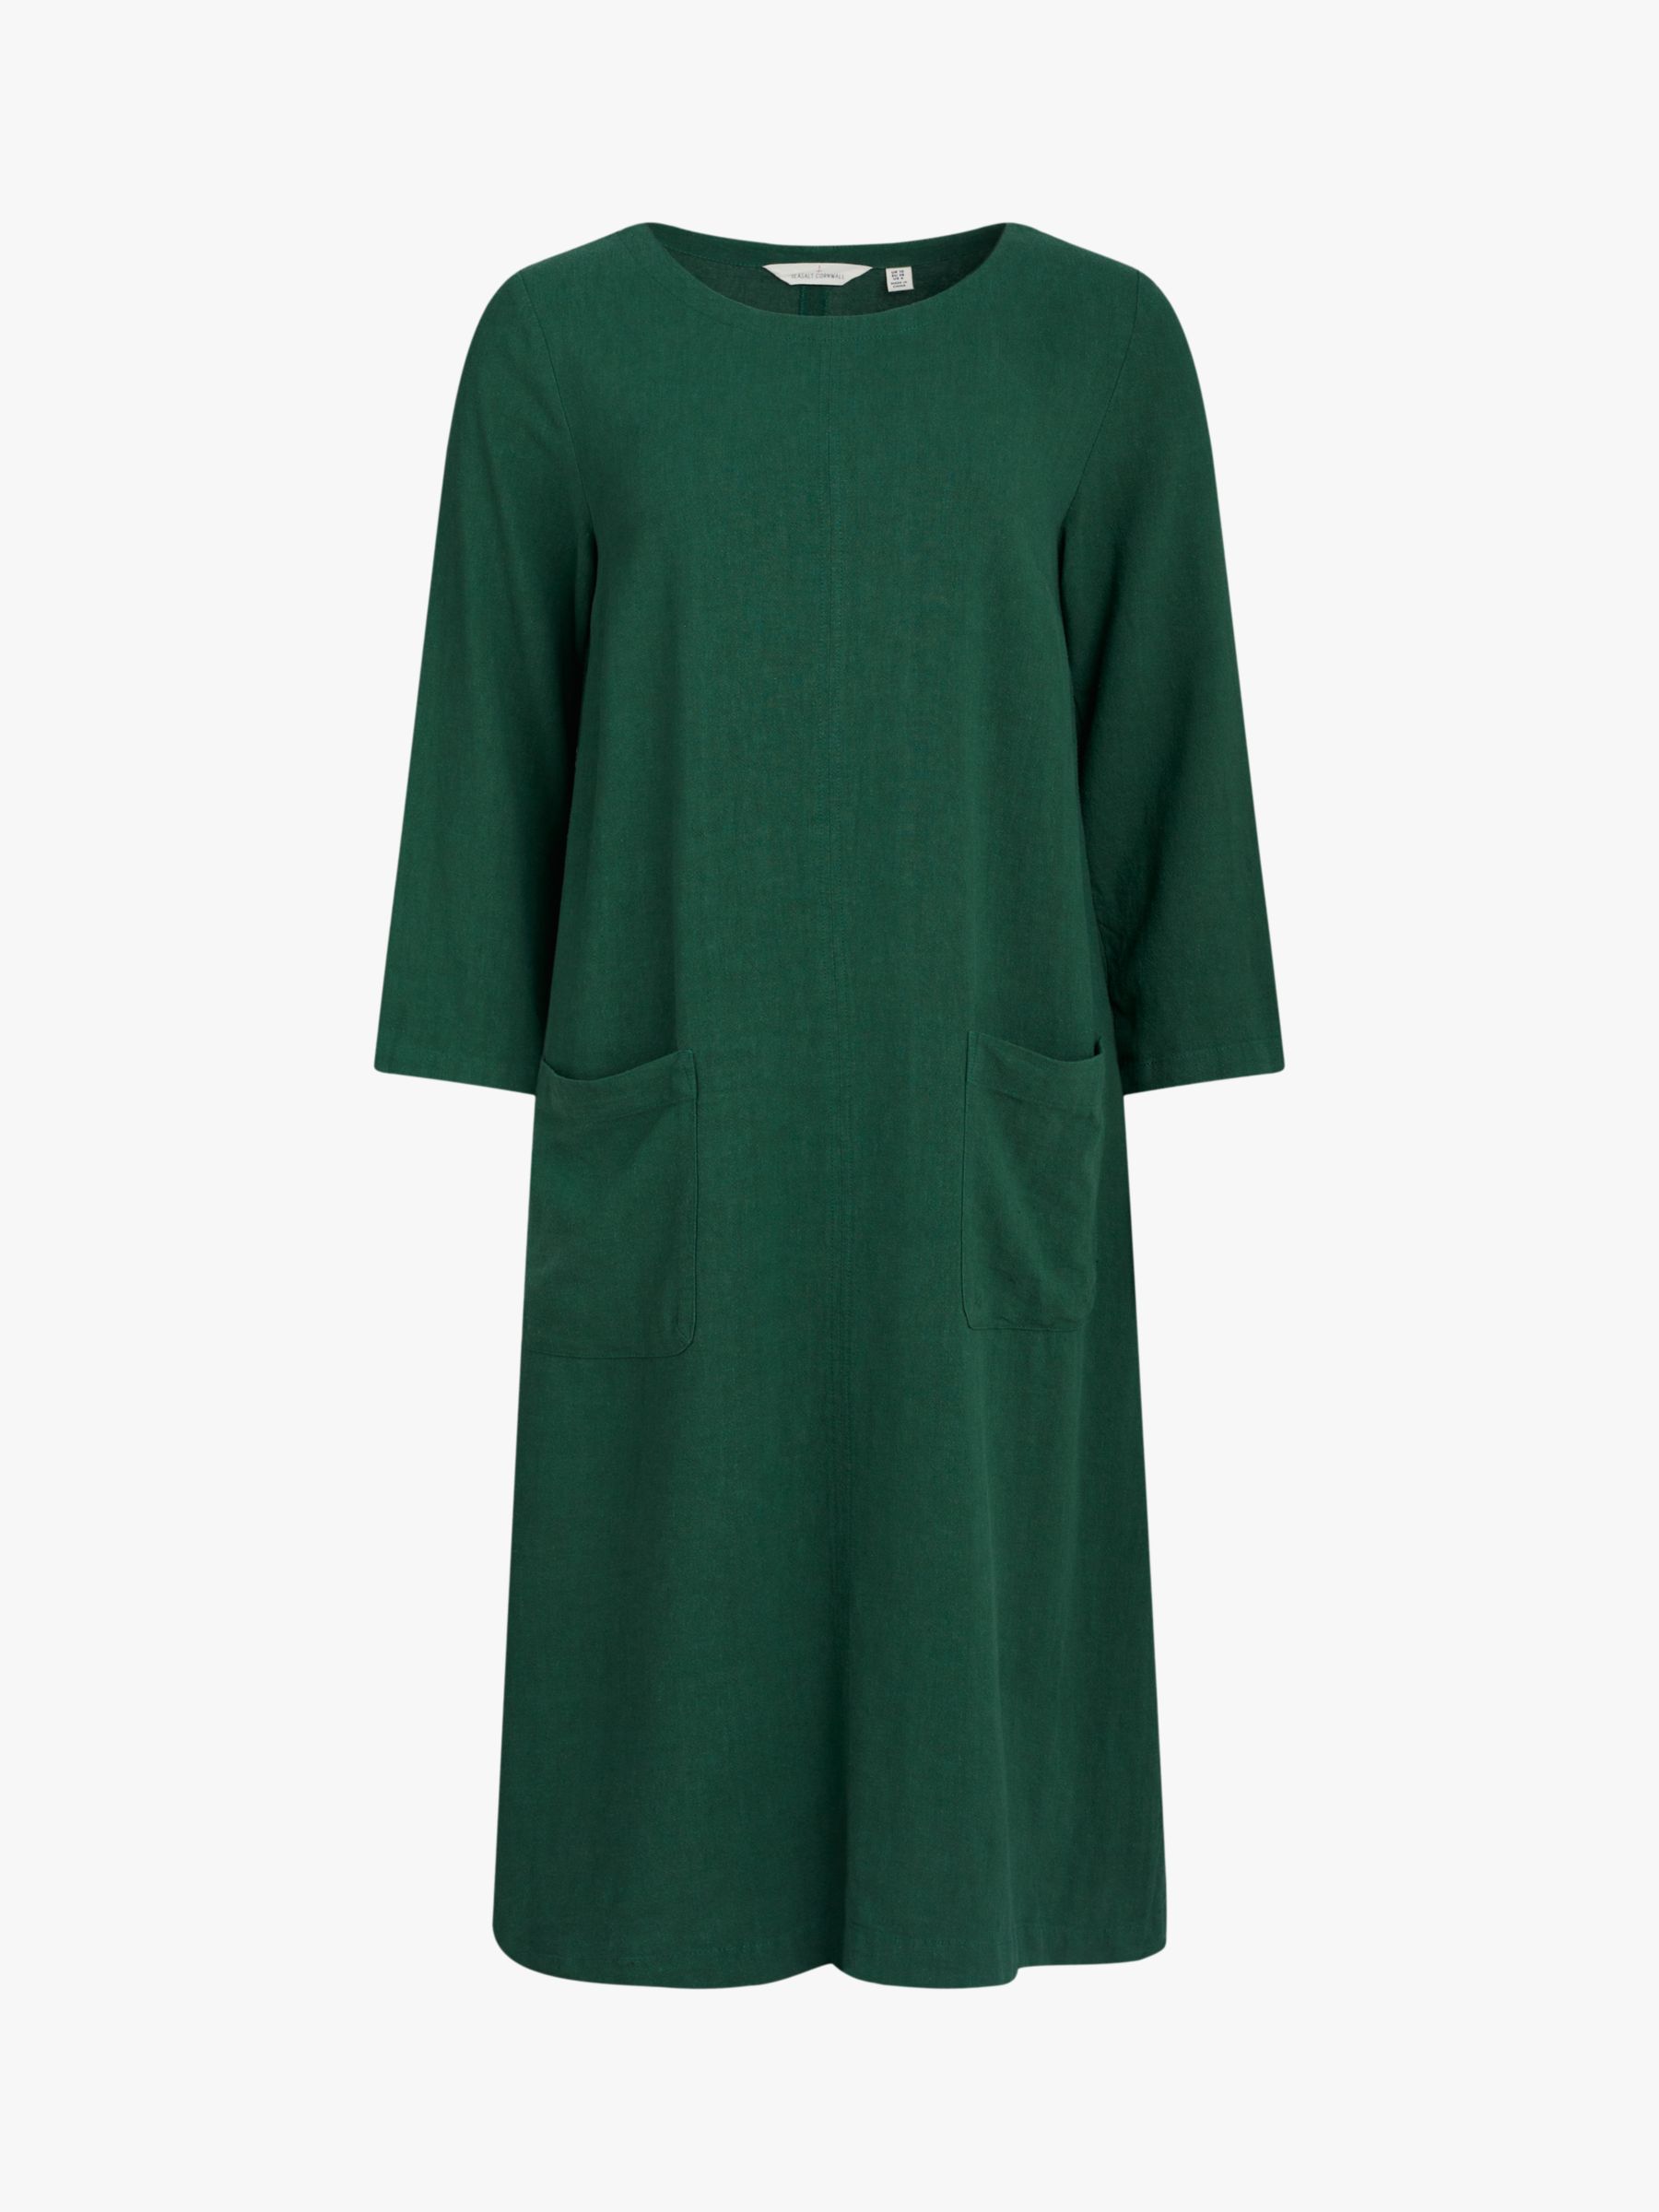 Seasalt Peak Harvest Linen Blend Dress, Dark Green at John Lewis & Partners